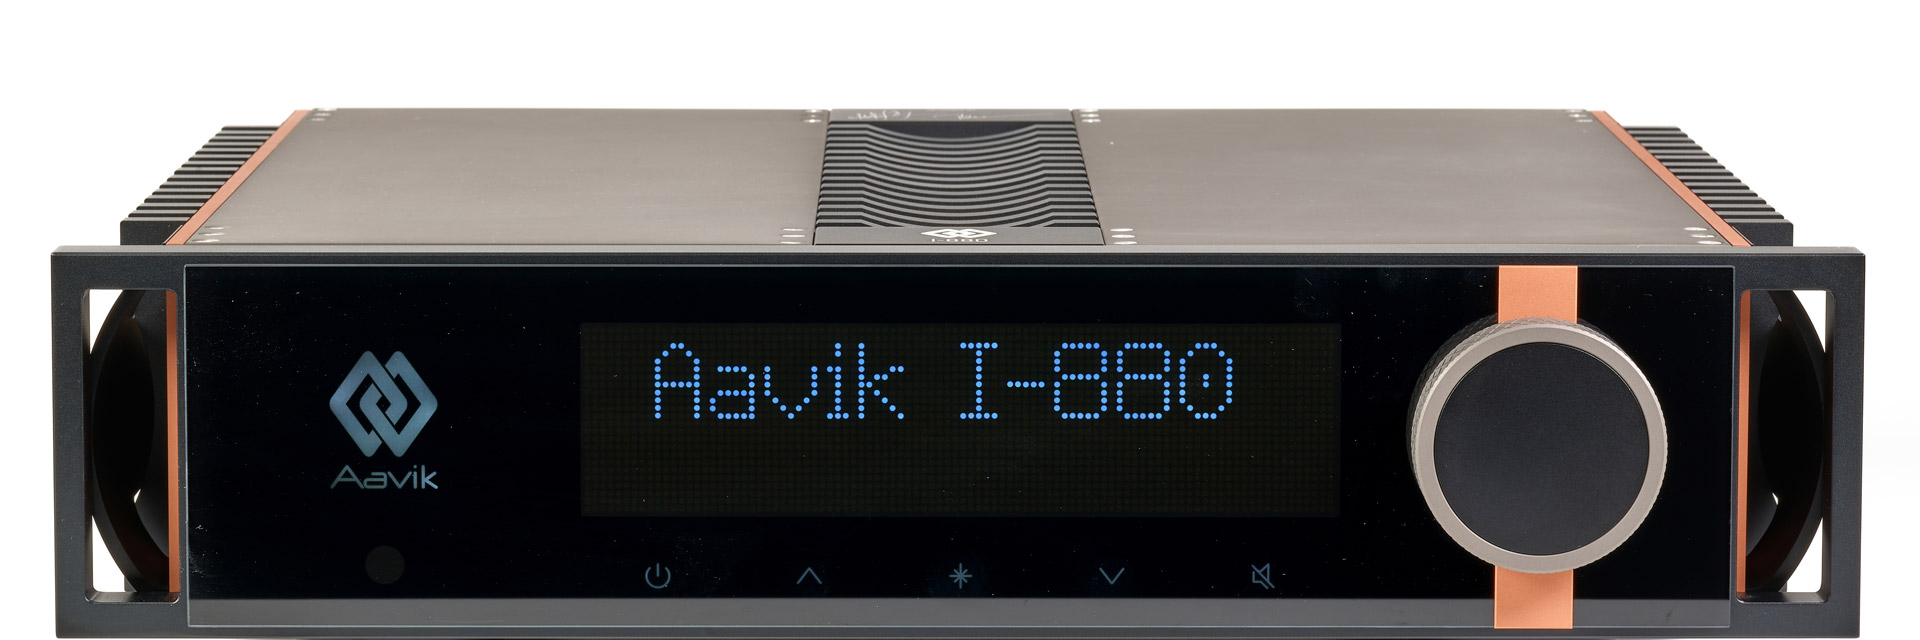 Aavik I-880